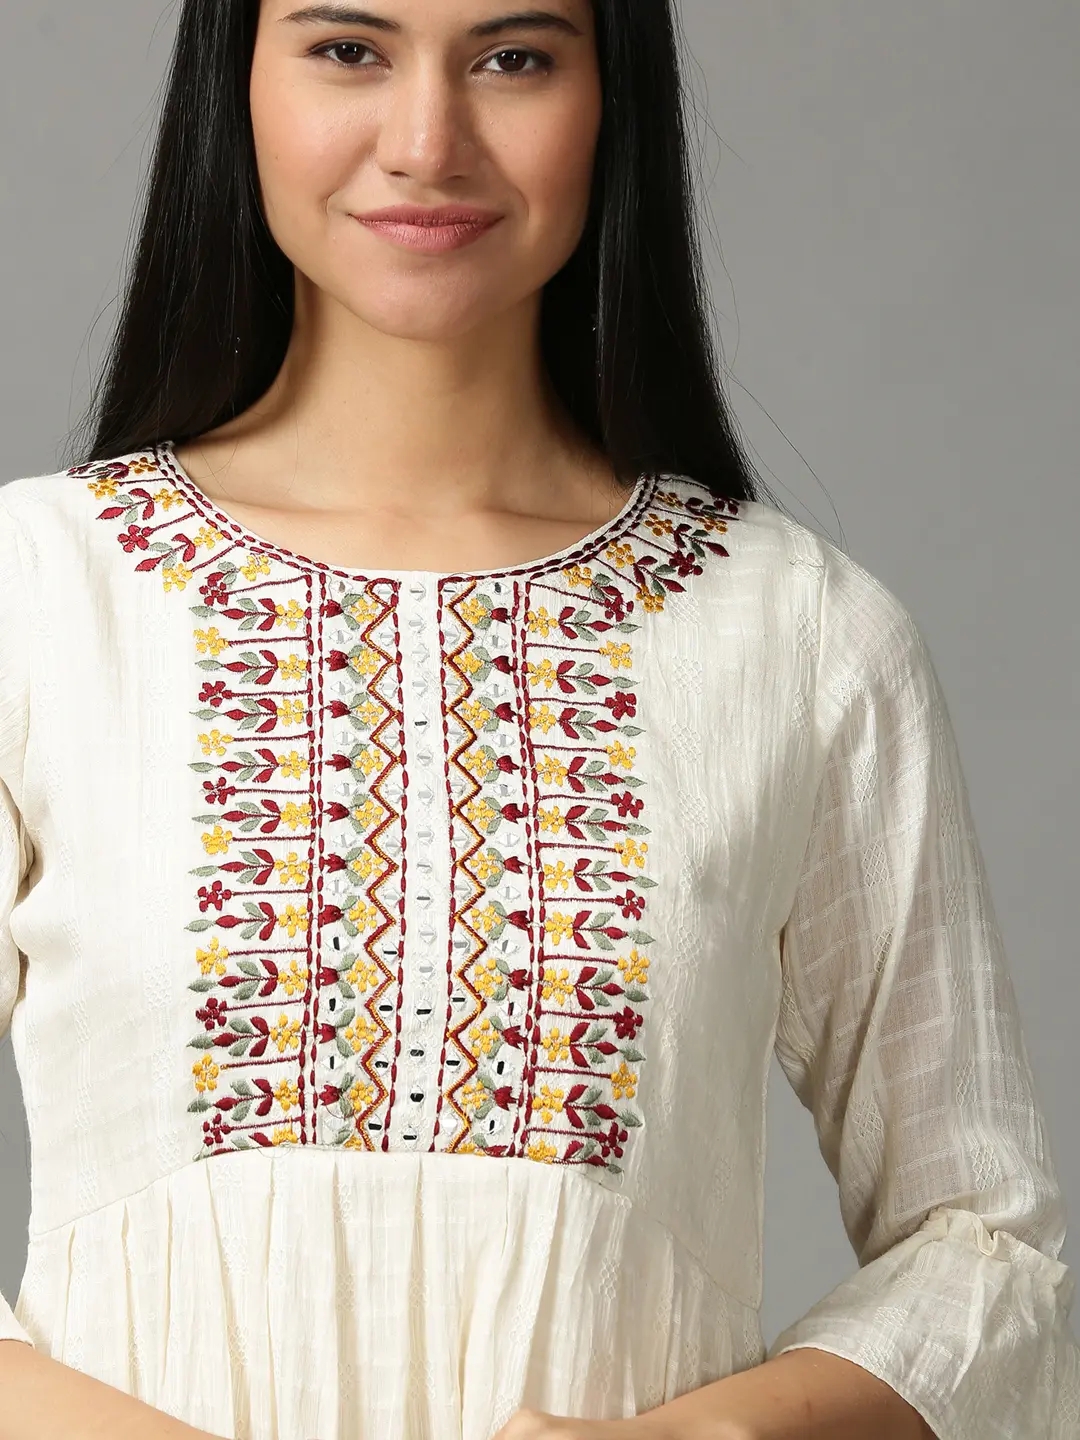 Embroidered Blouse Designs for Churidar Kurta and Sari Indian Clothing